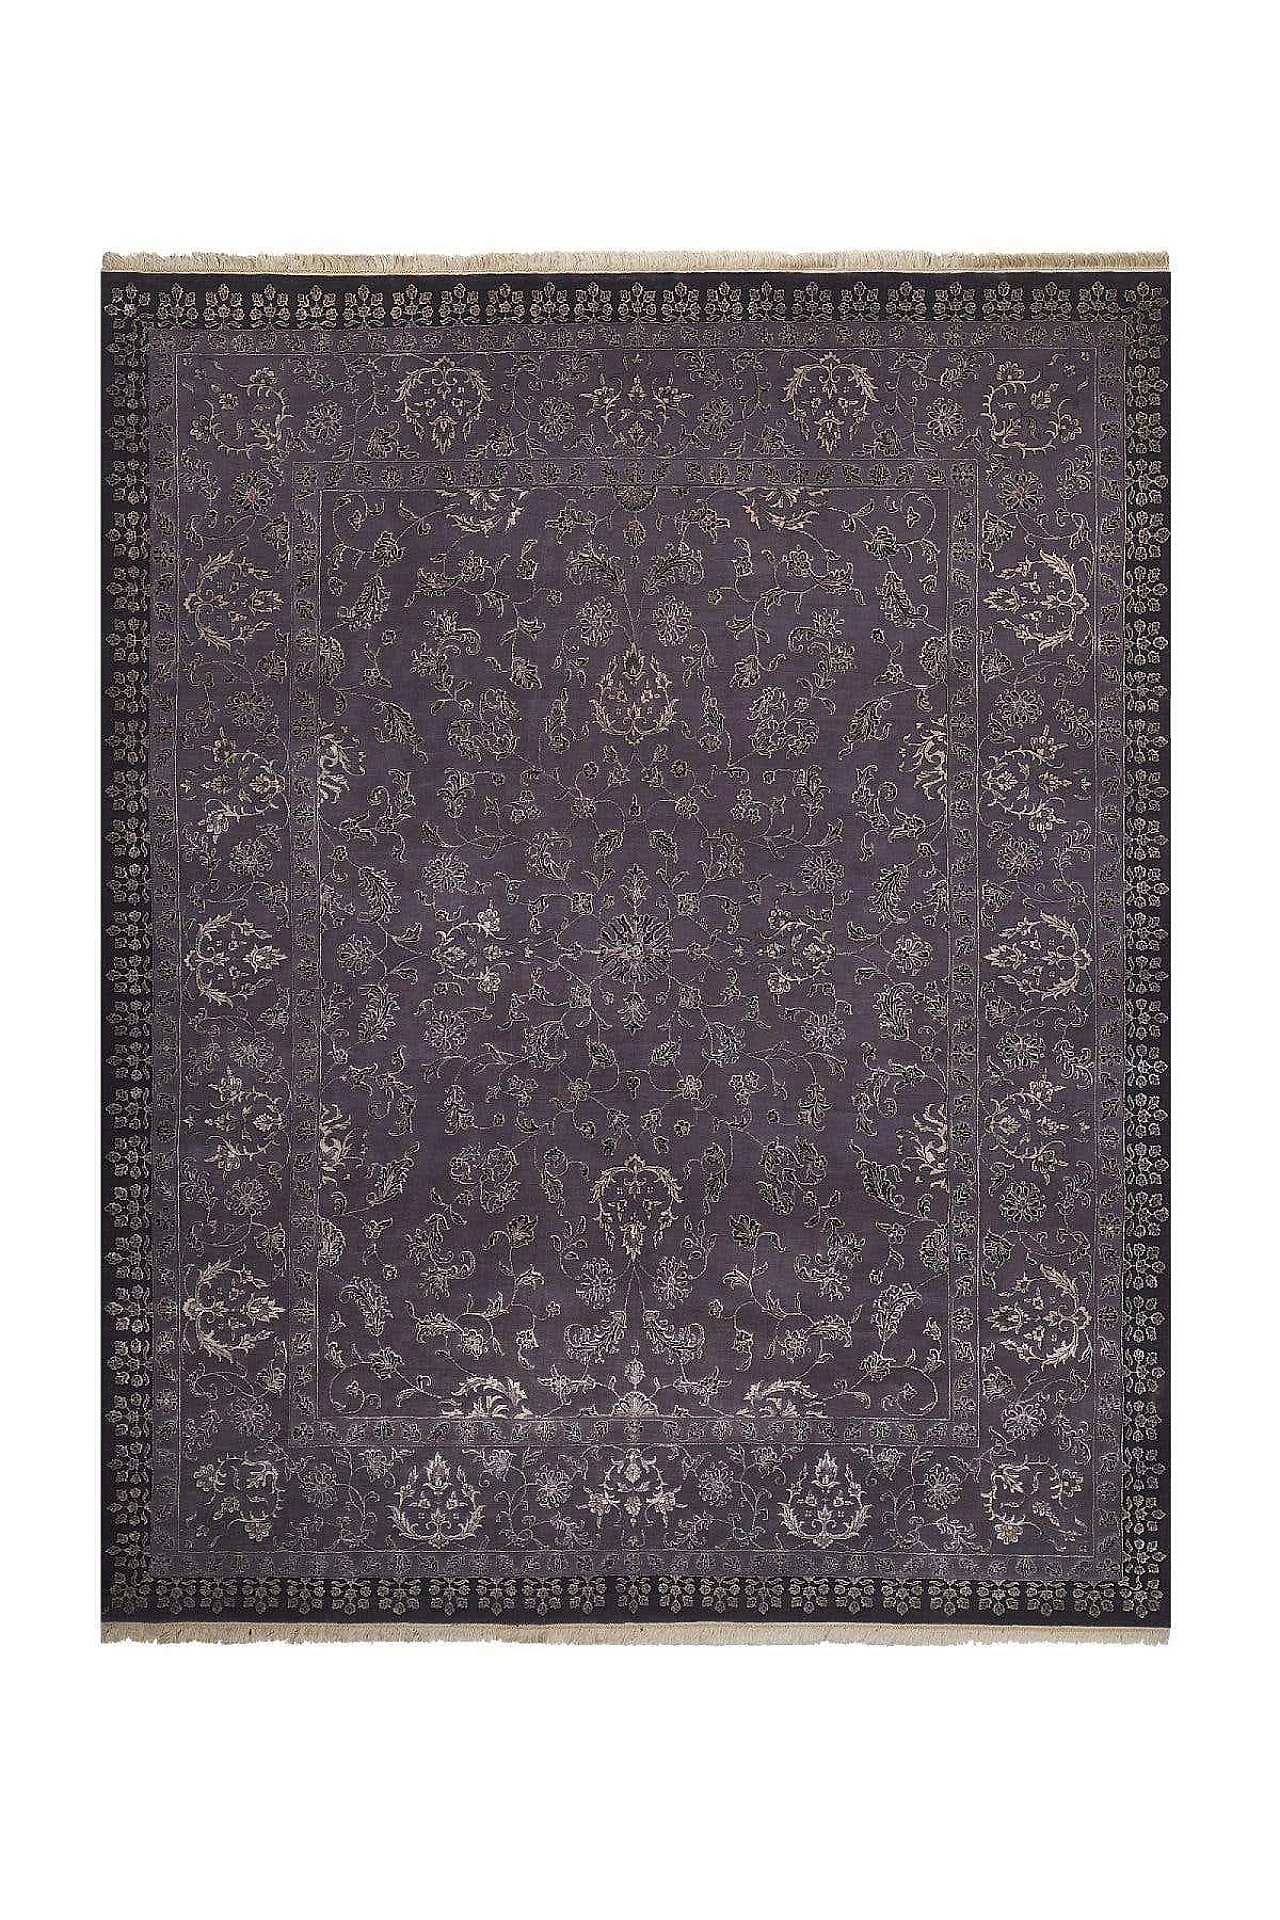 Fine silk Nain carpet in oriental style, early 20th century 1